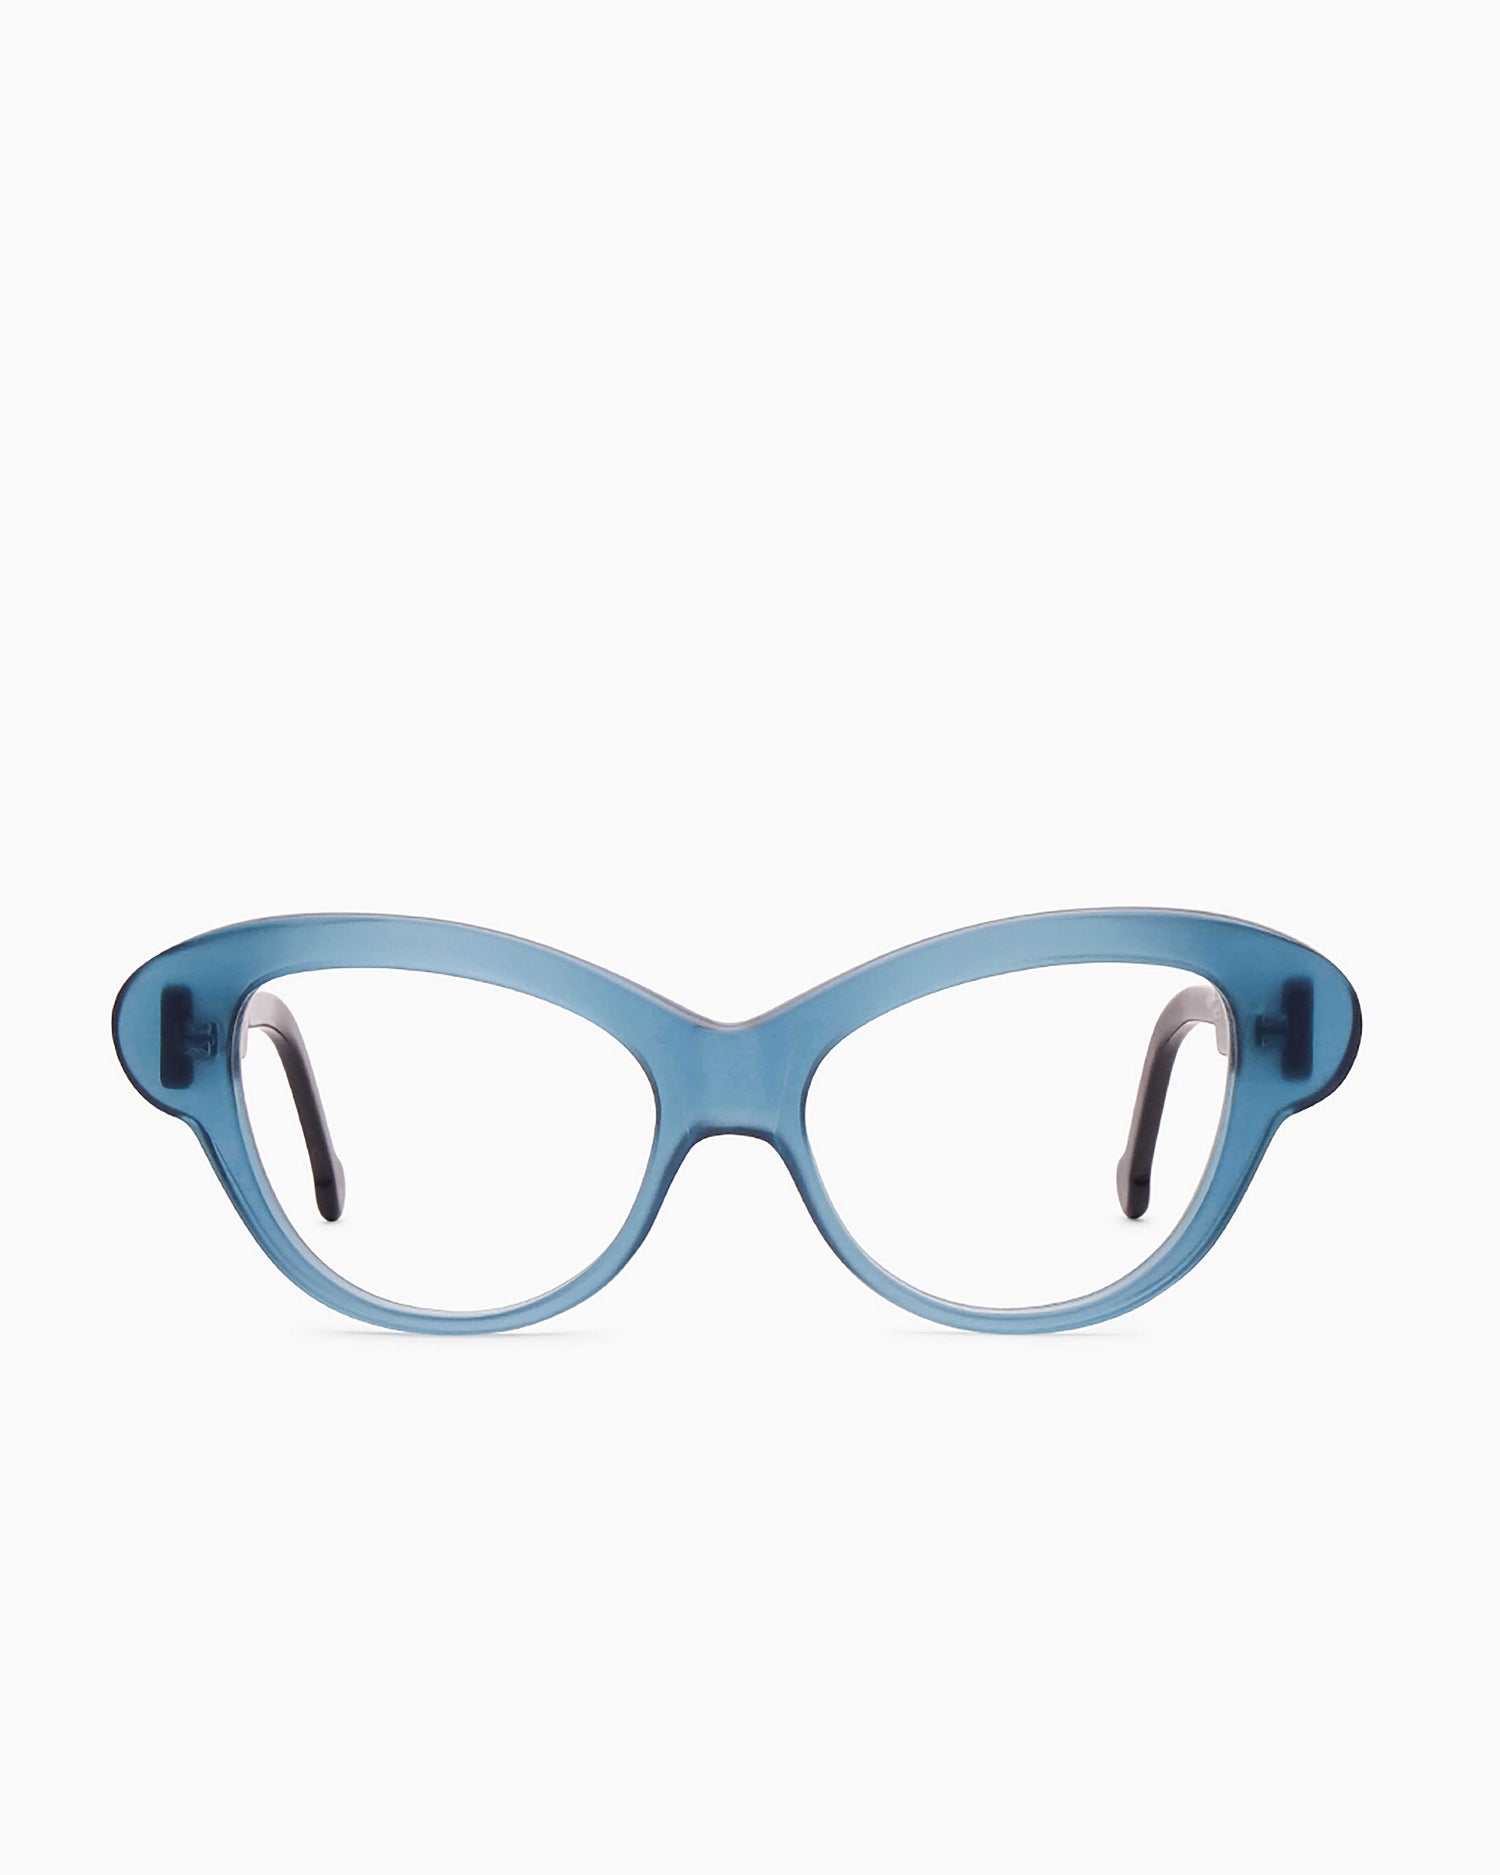 Marie-Sophie Dion - Perrier - Blu | glasses bar:  Marie-Sophie Dion